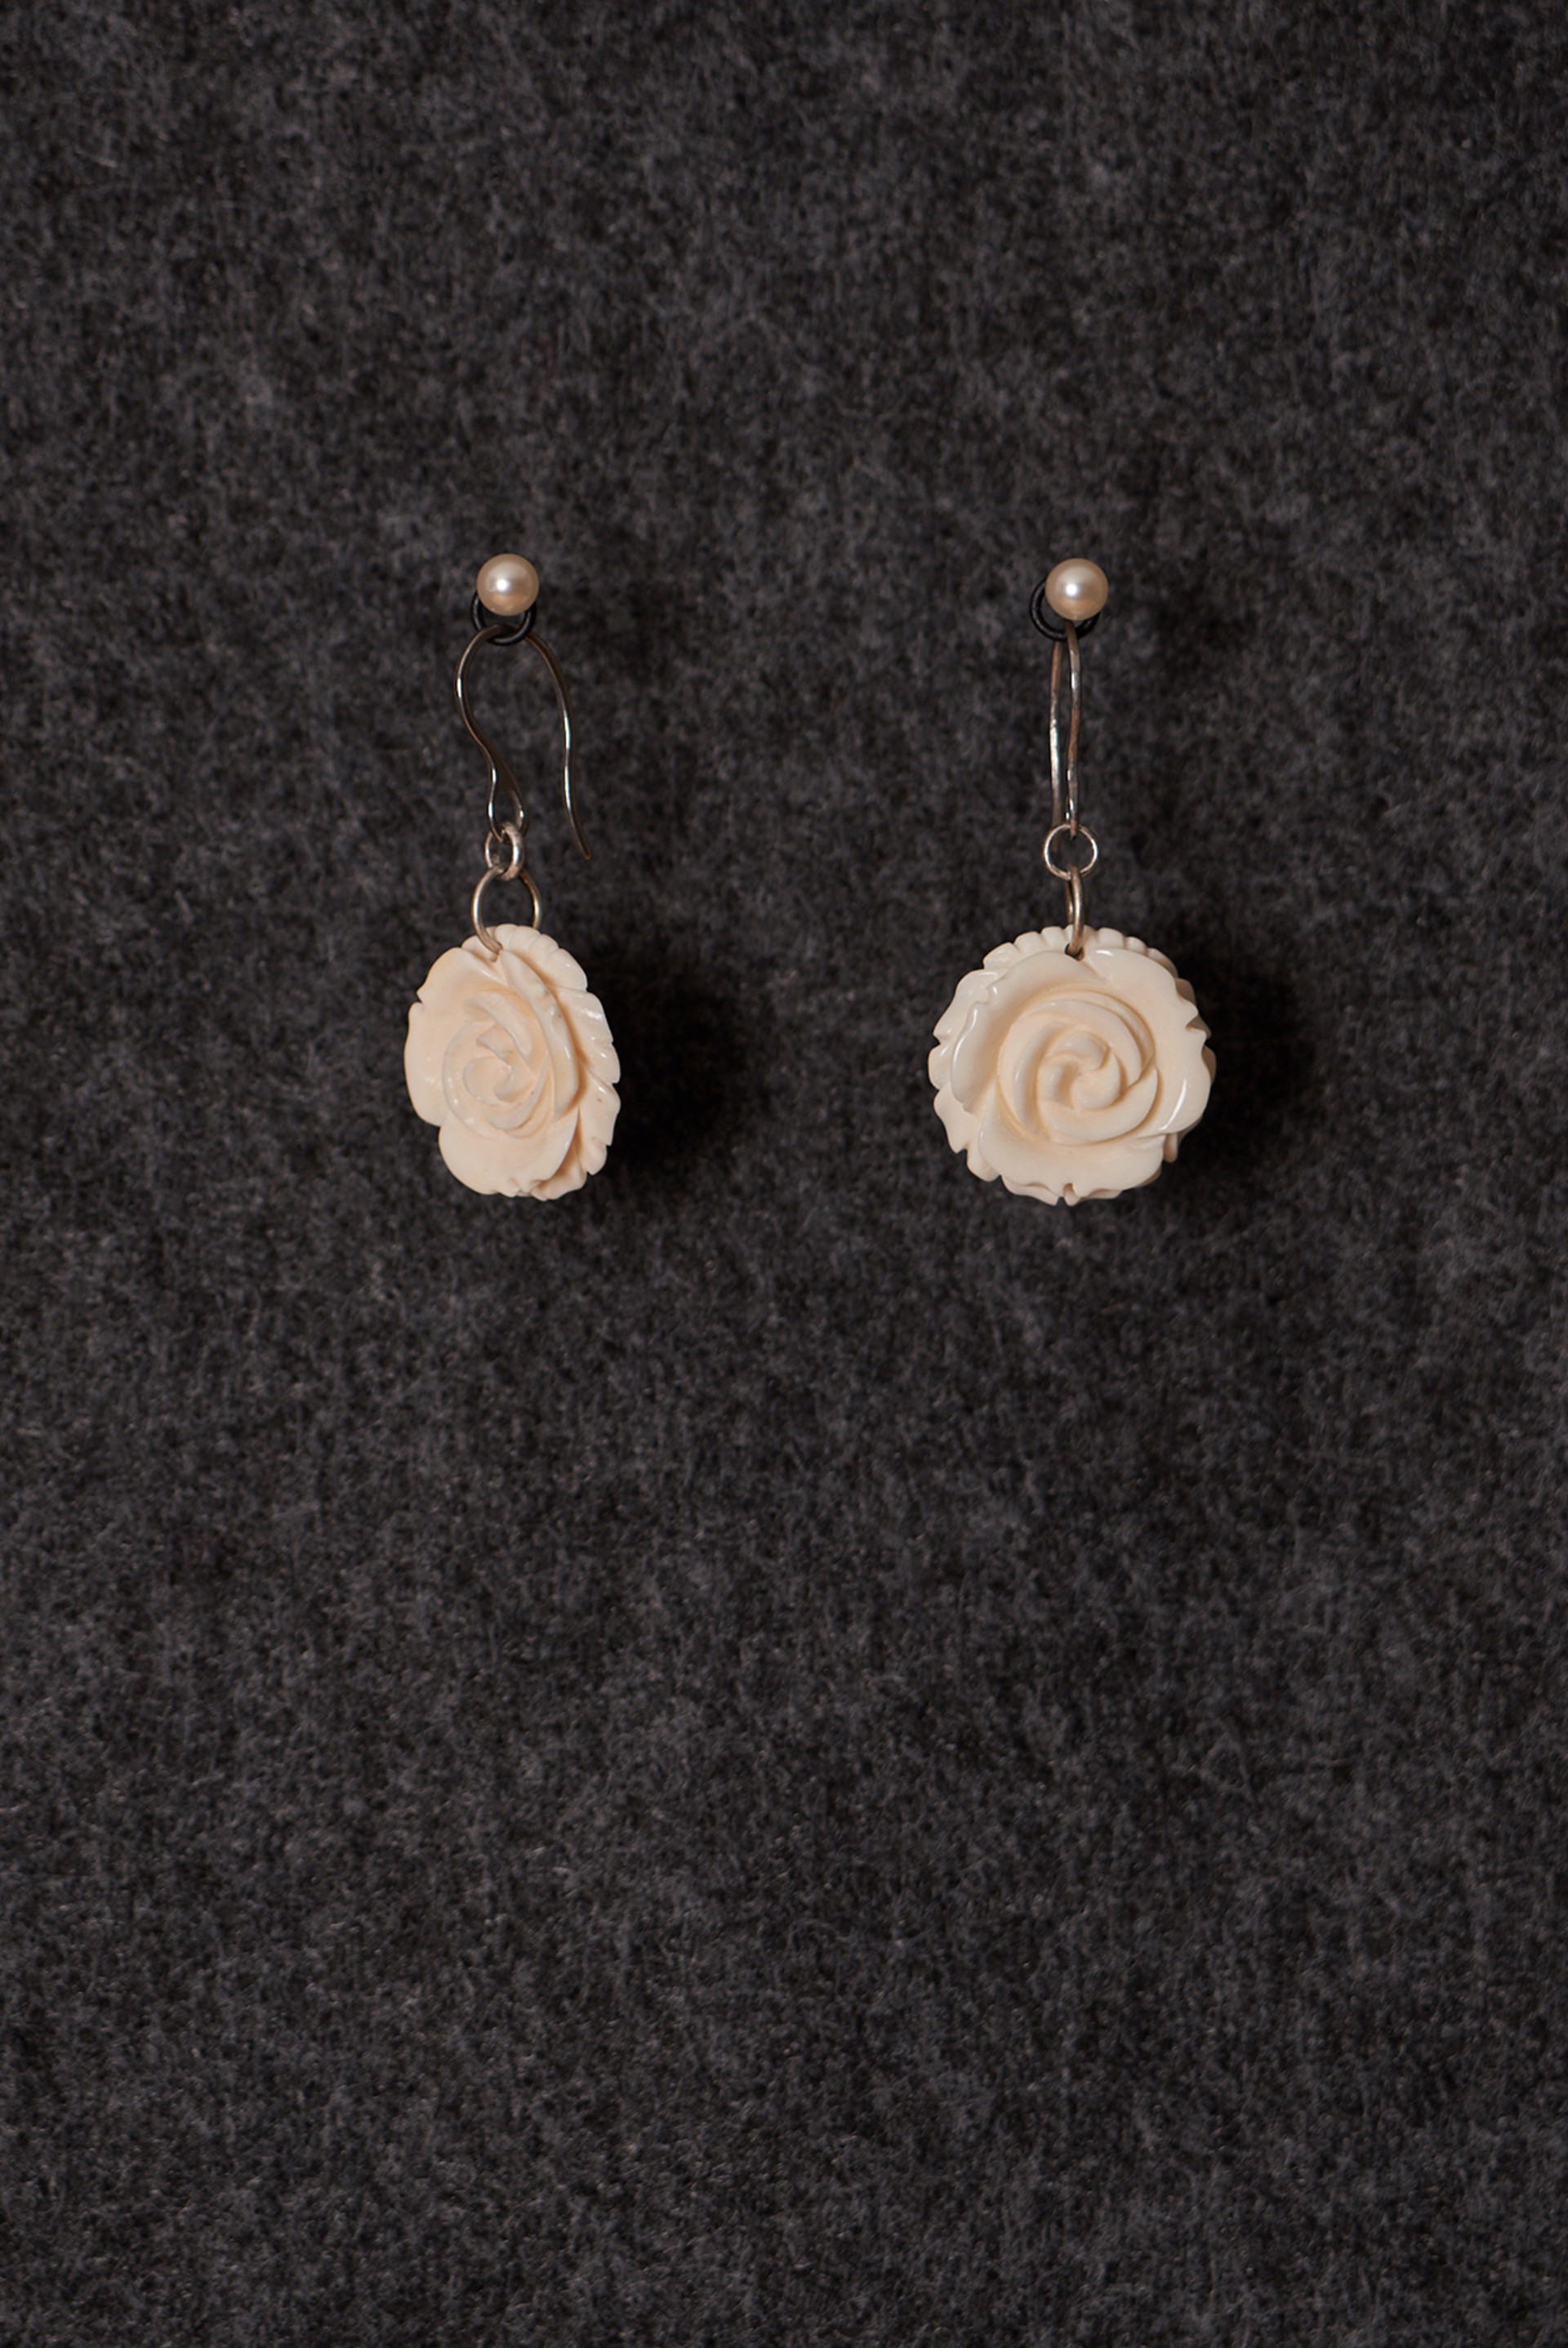 Silver Petite Rosebone Earrings by Cameron Johnson